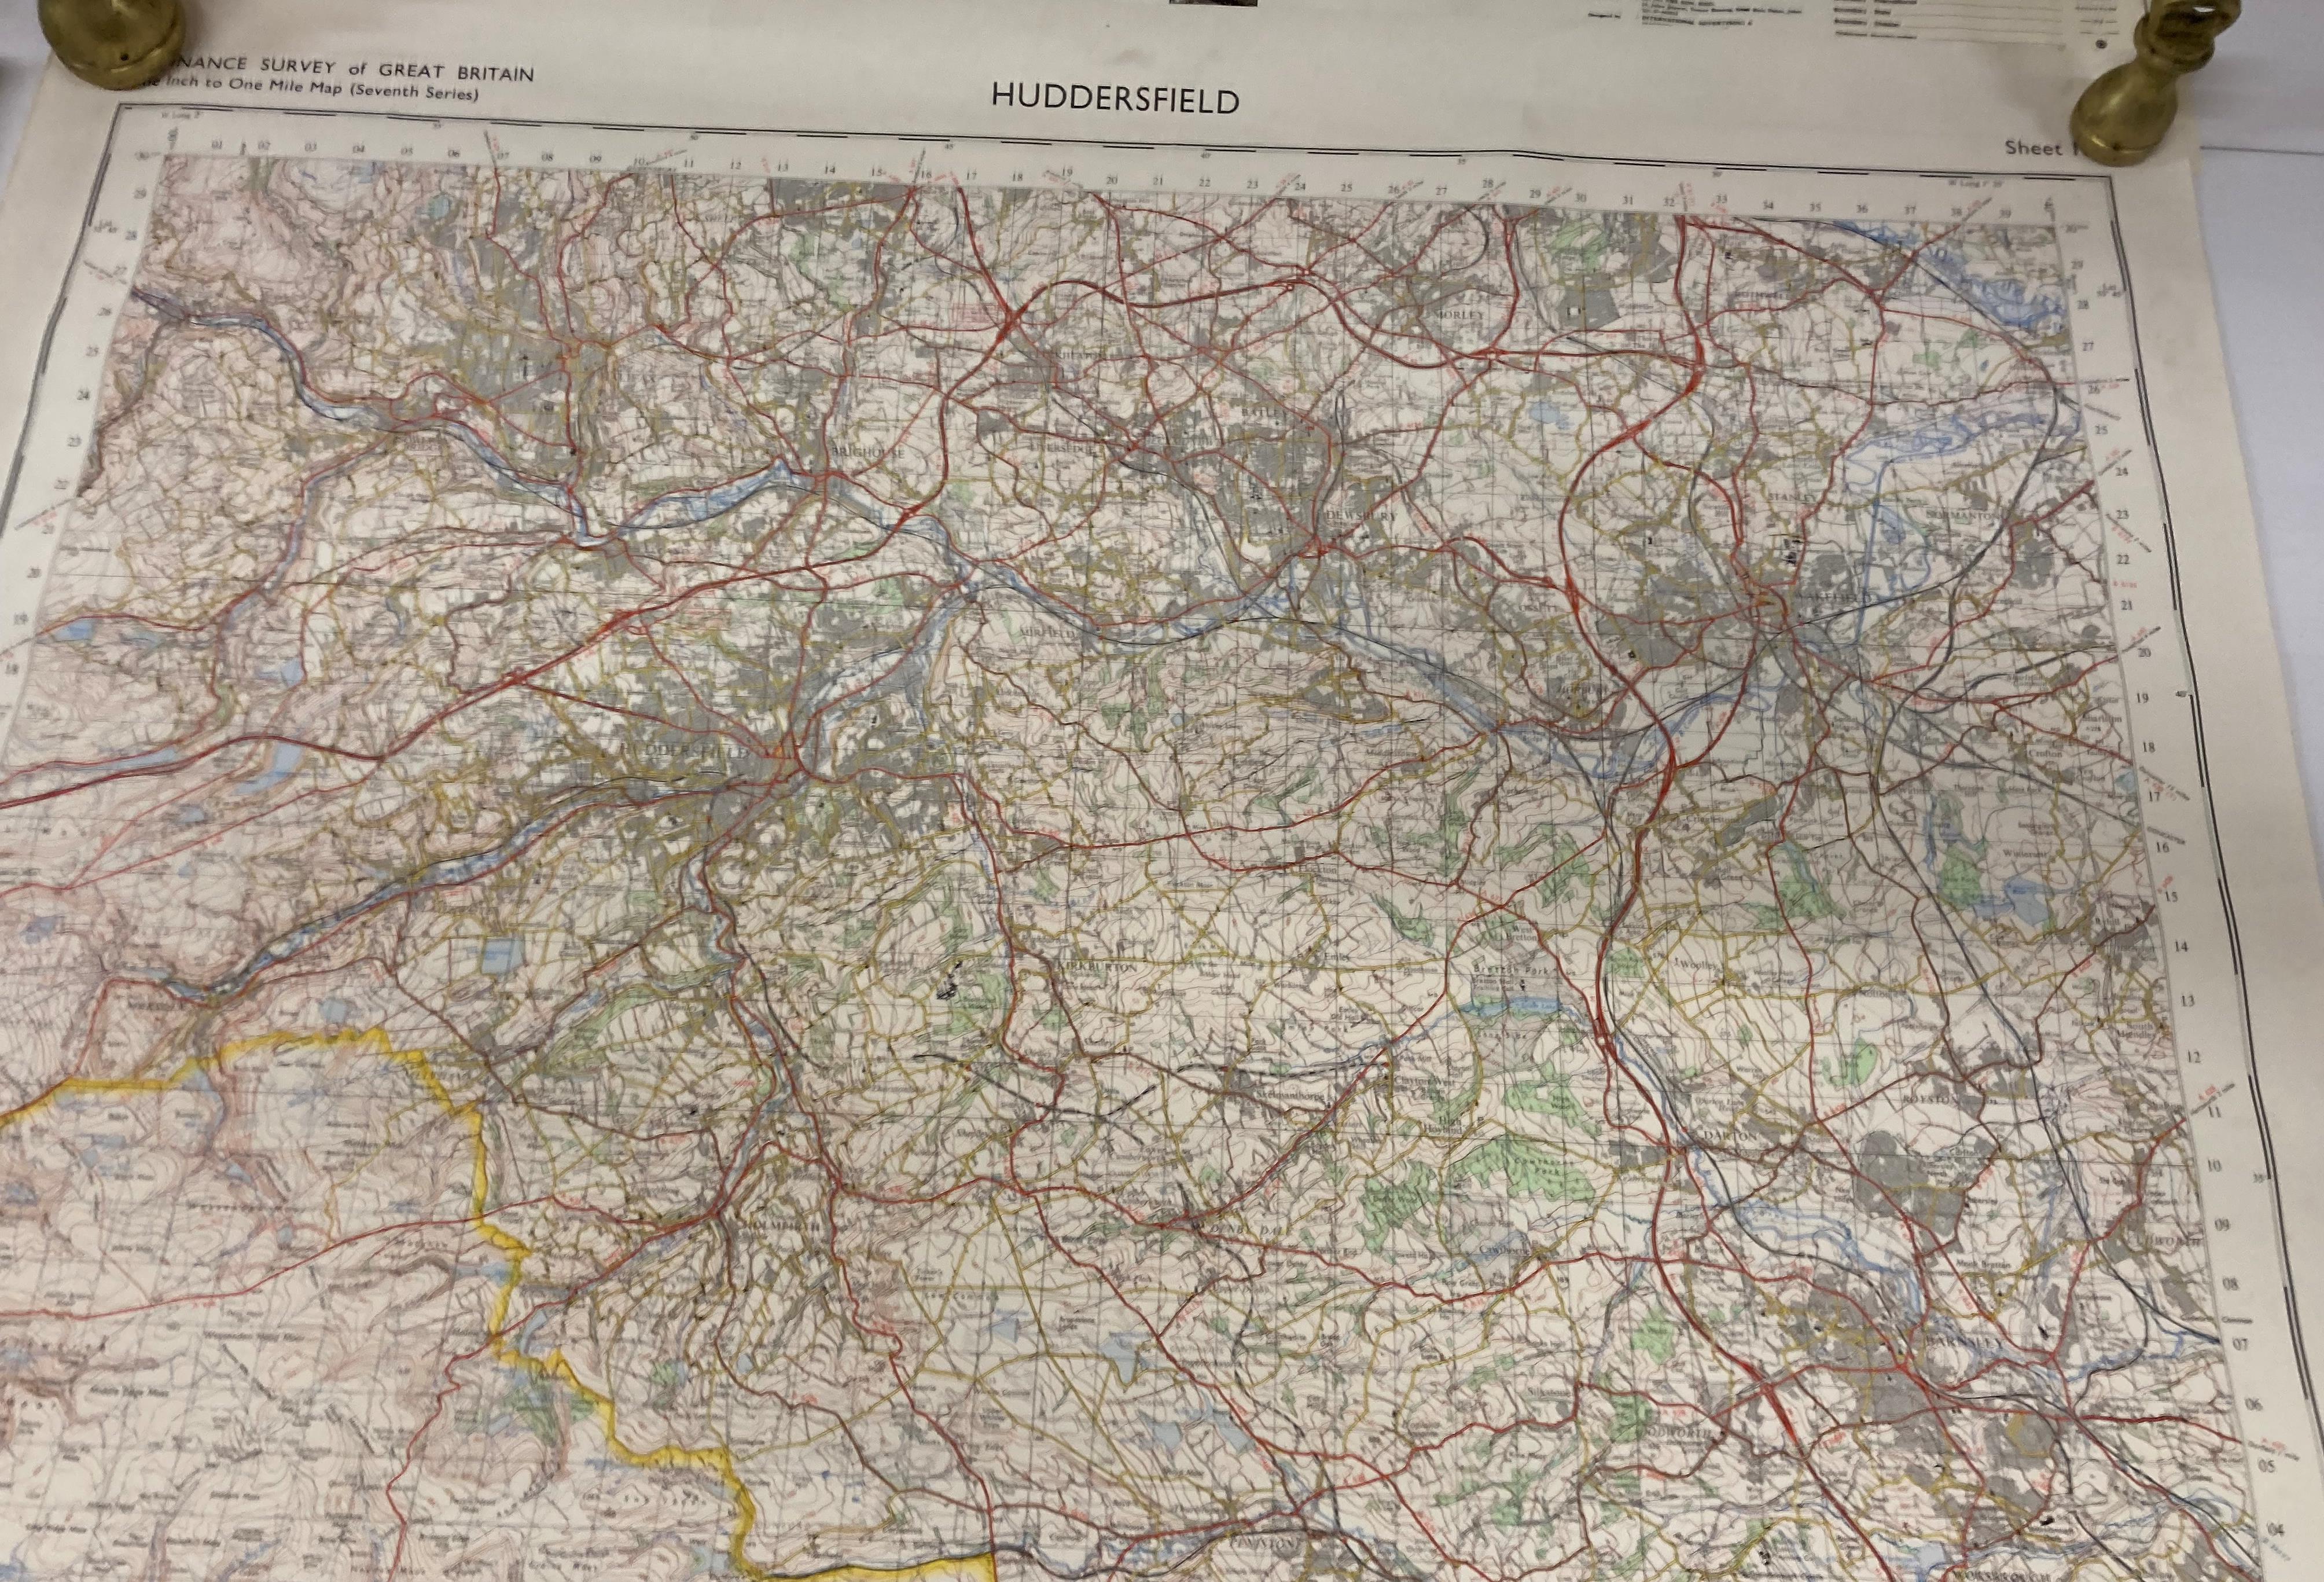 Ordnance Survey map of Huddersfield, - Image 2 of 3